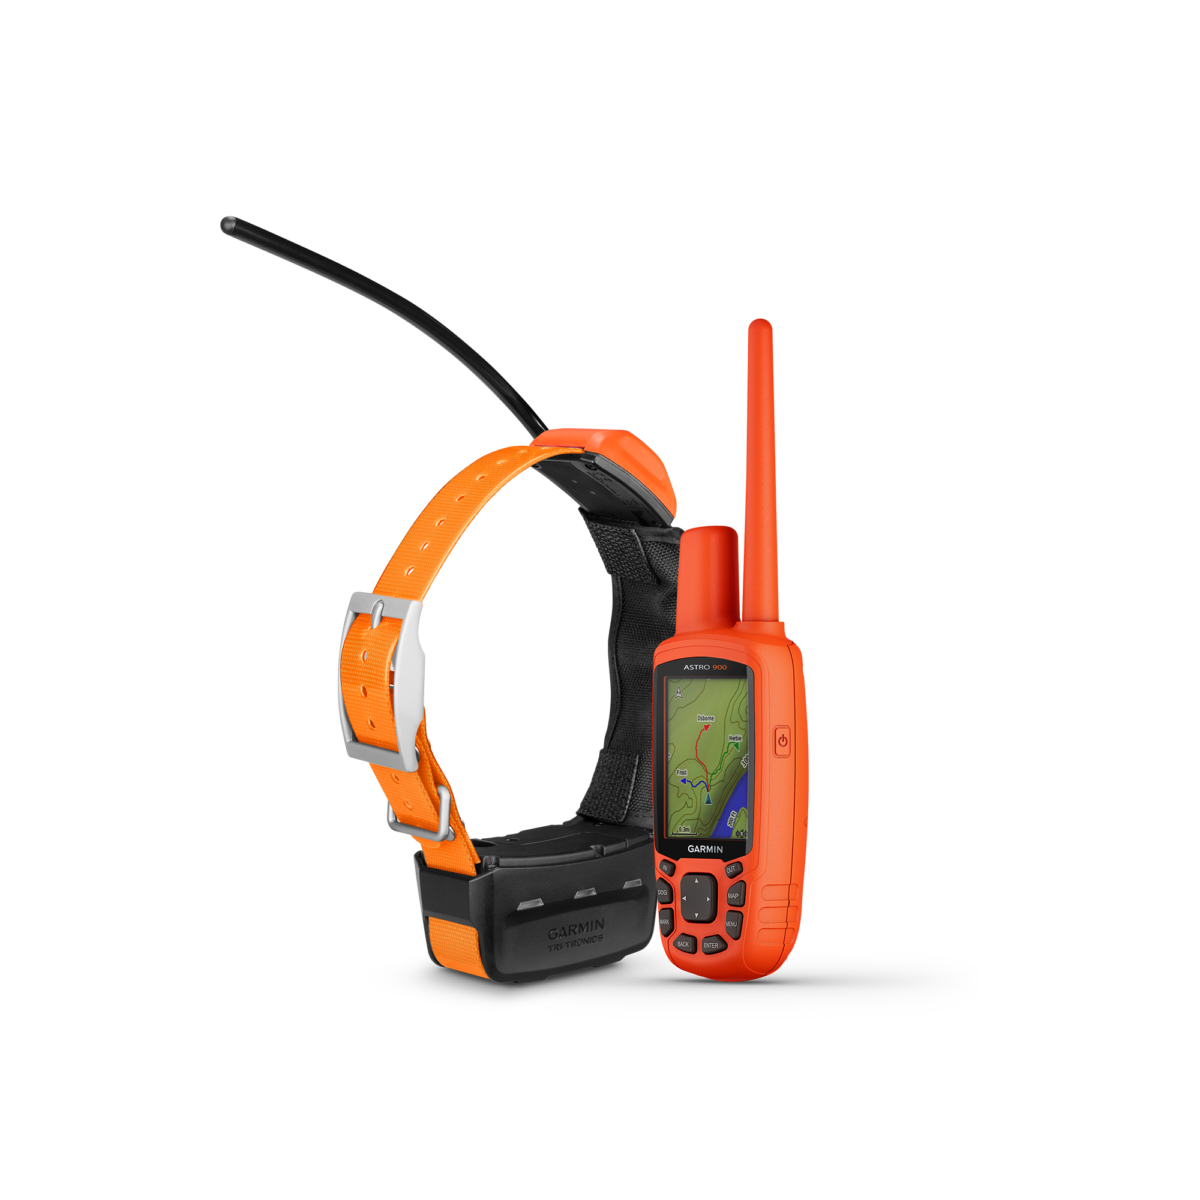 Garmin Astro 900 GPS dog tracker T 9 device and handheld GPS tracker bundle